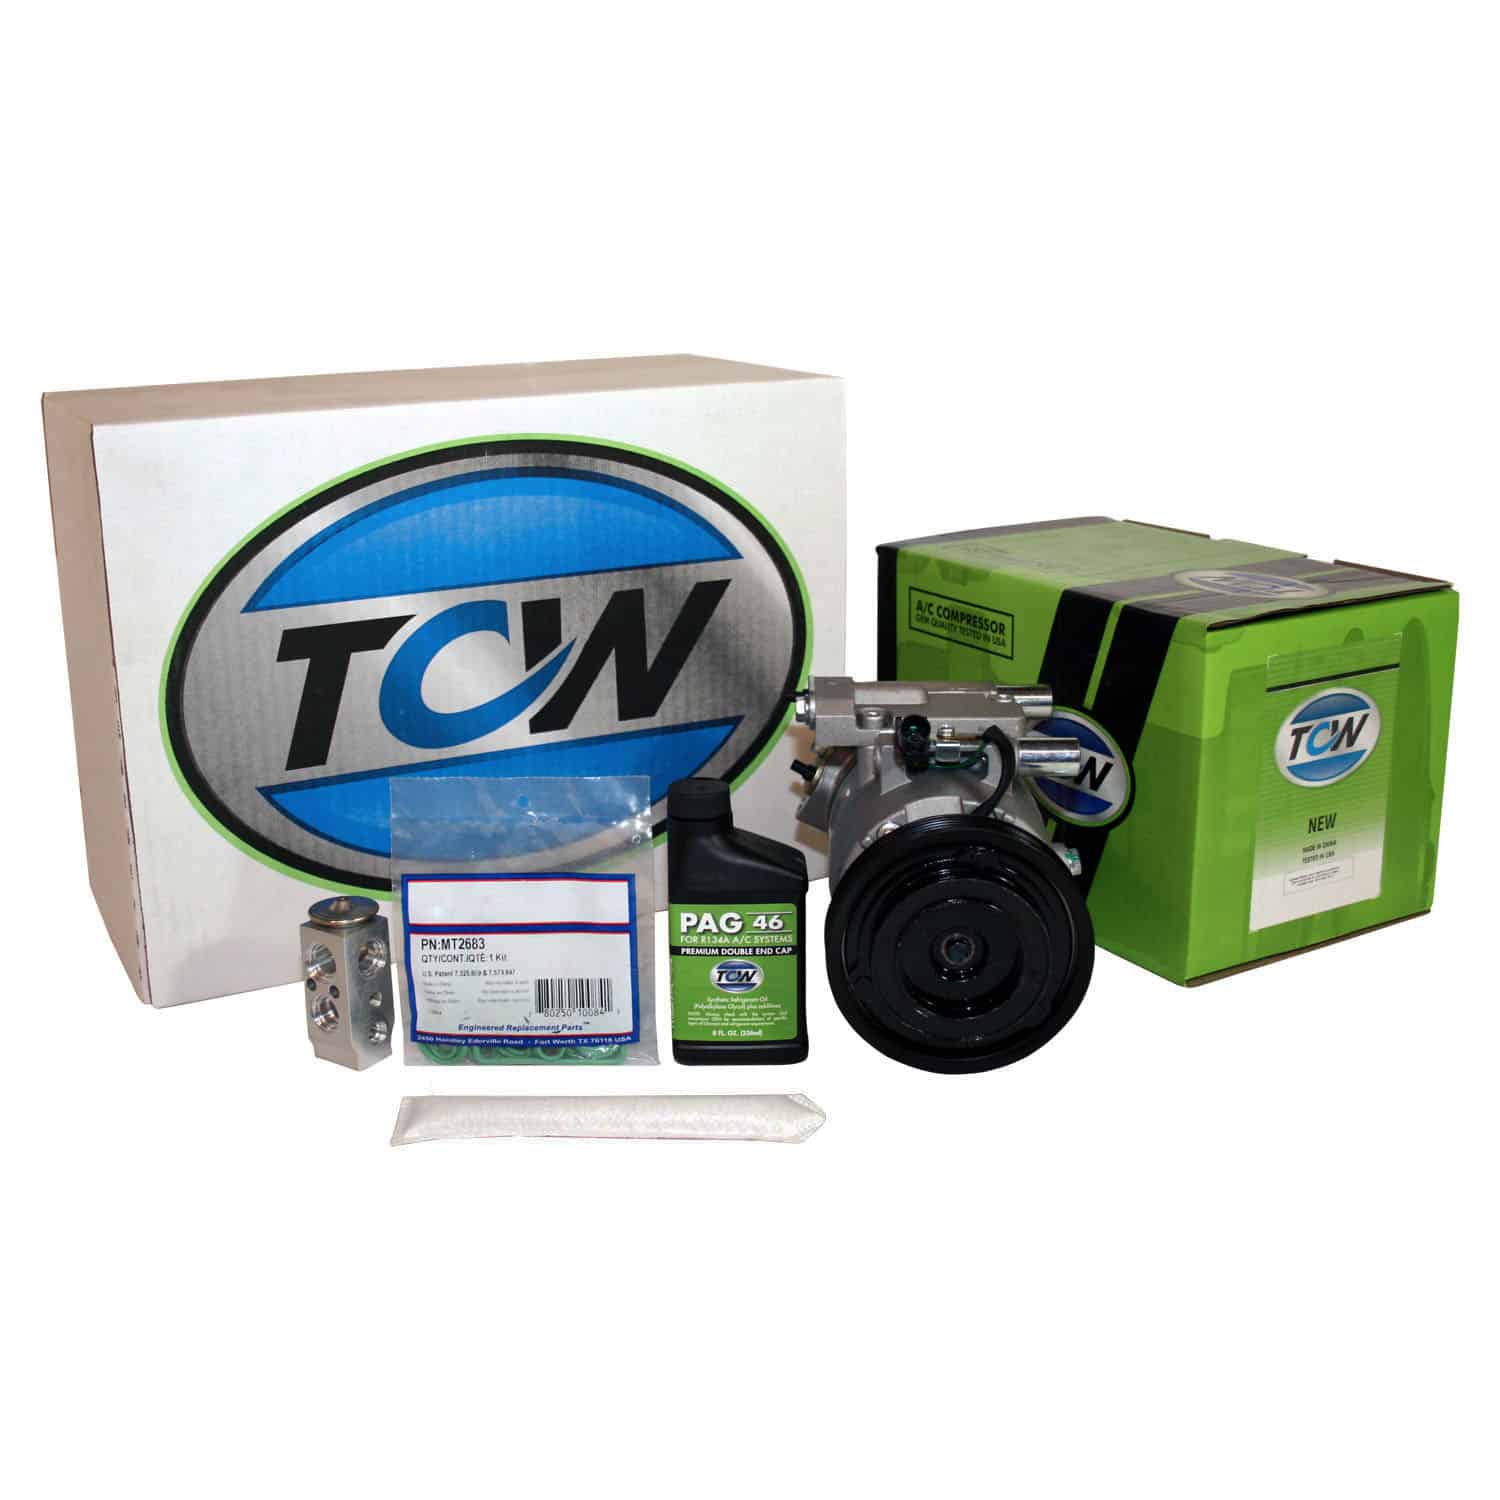 TCW Vehicle A/C Kit K1000412N New Product Image field_60b6a13a6e67c